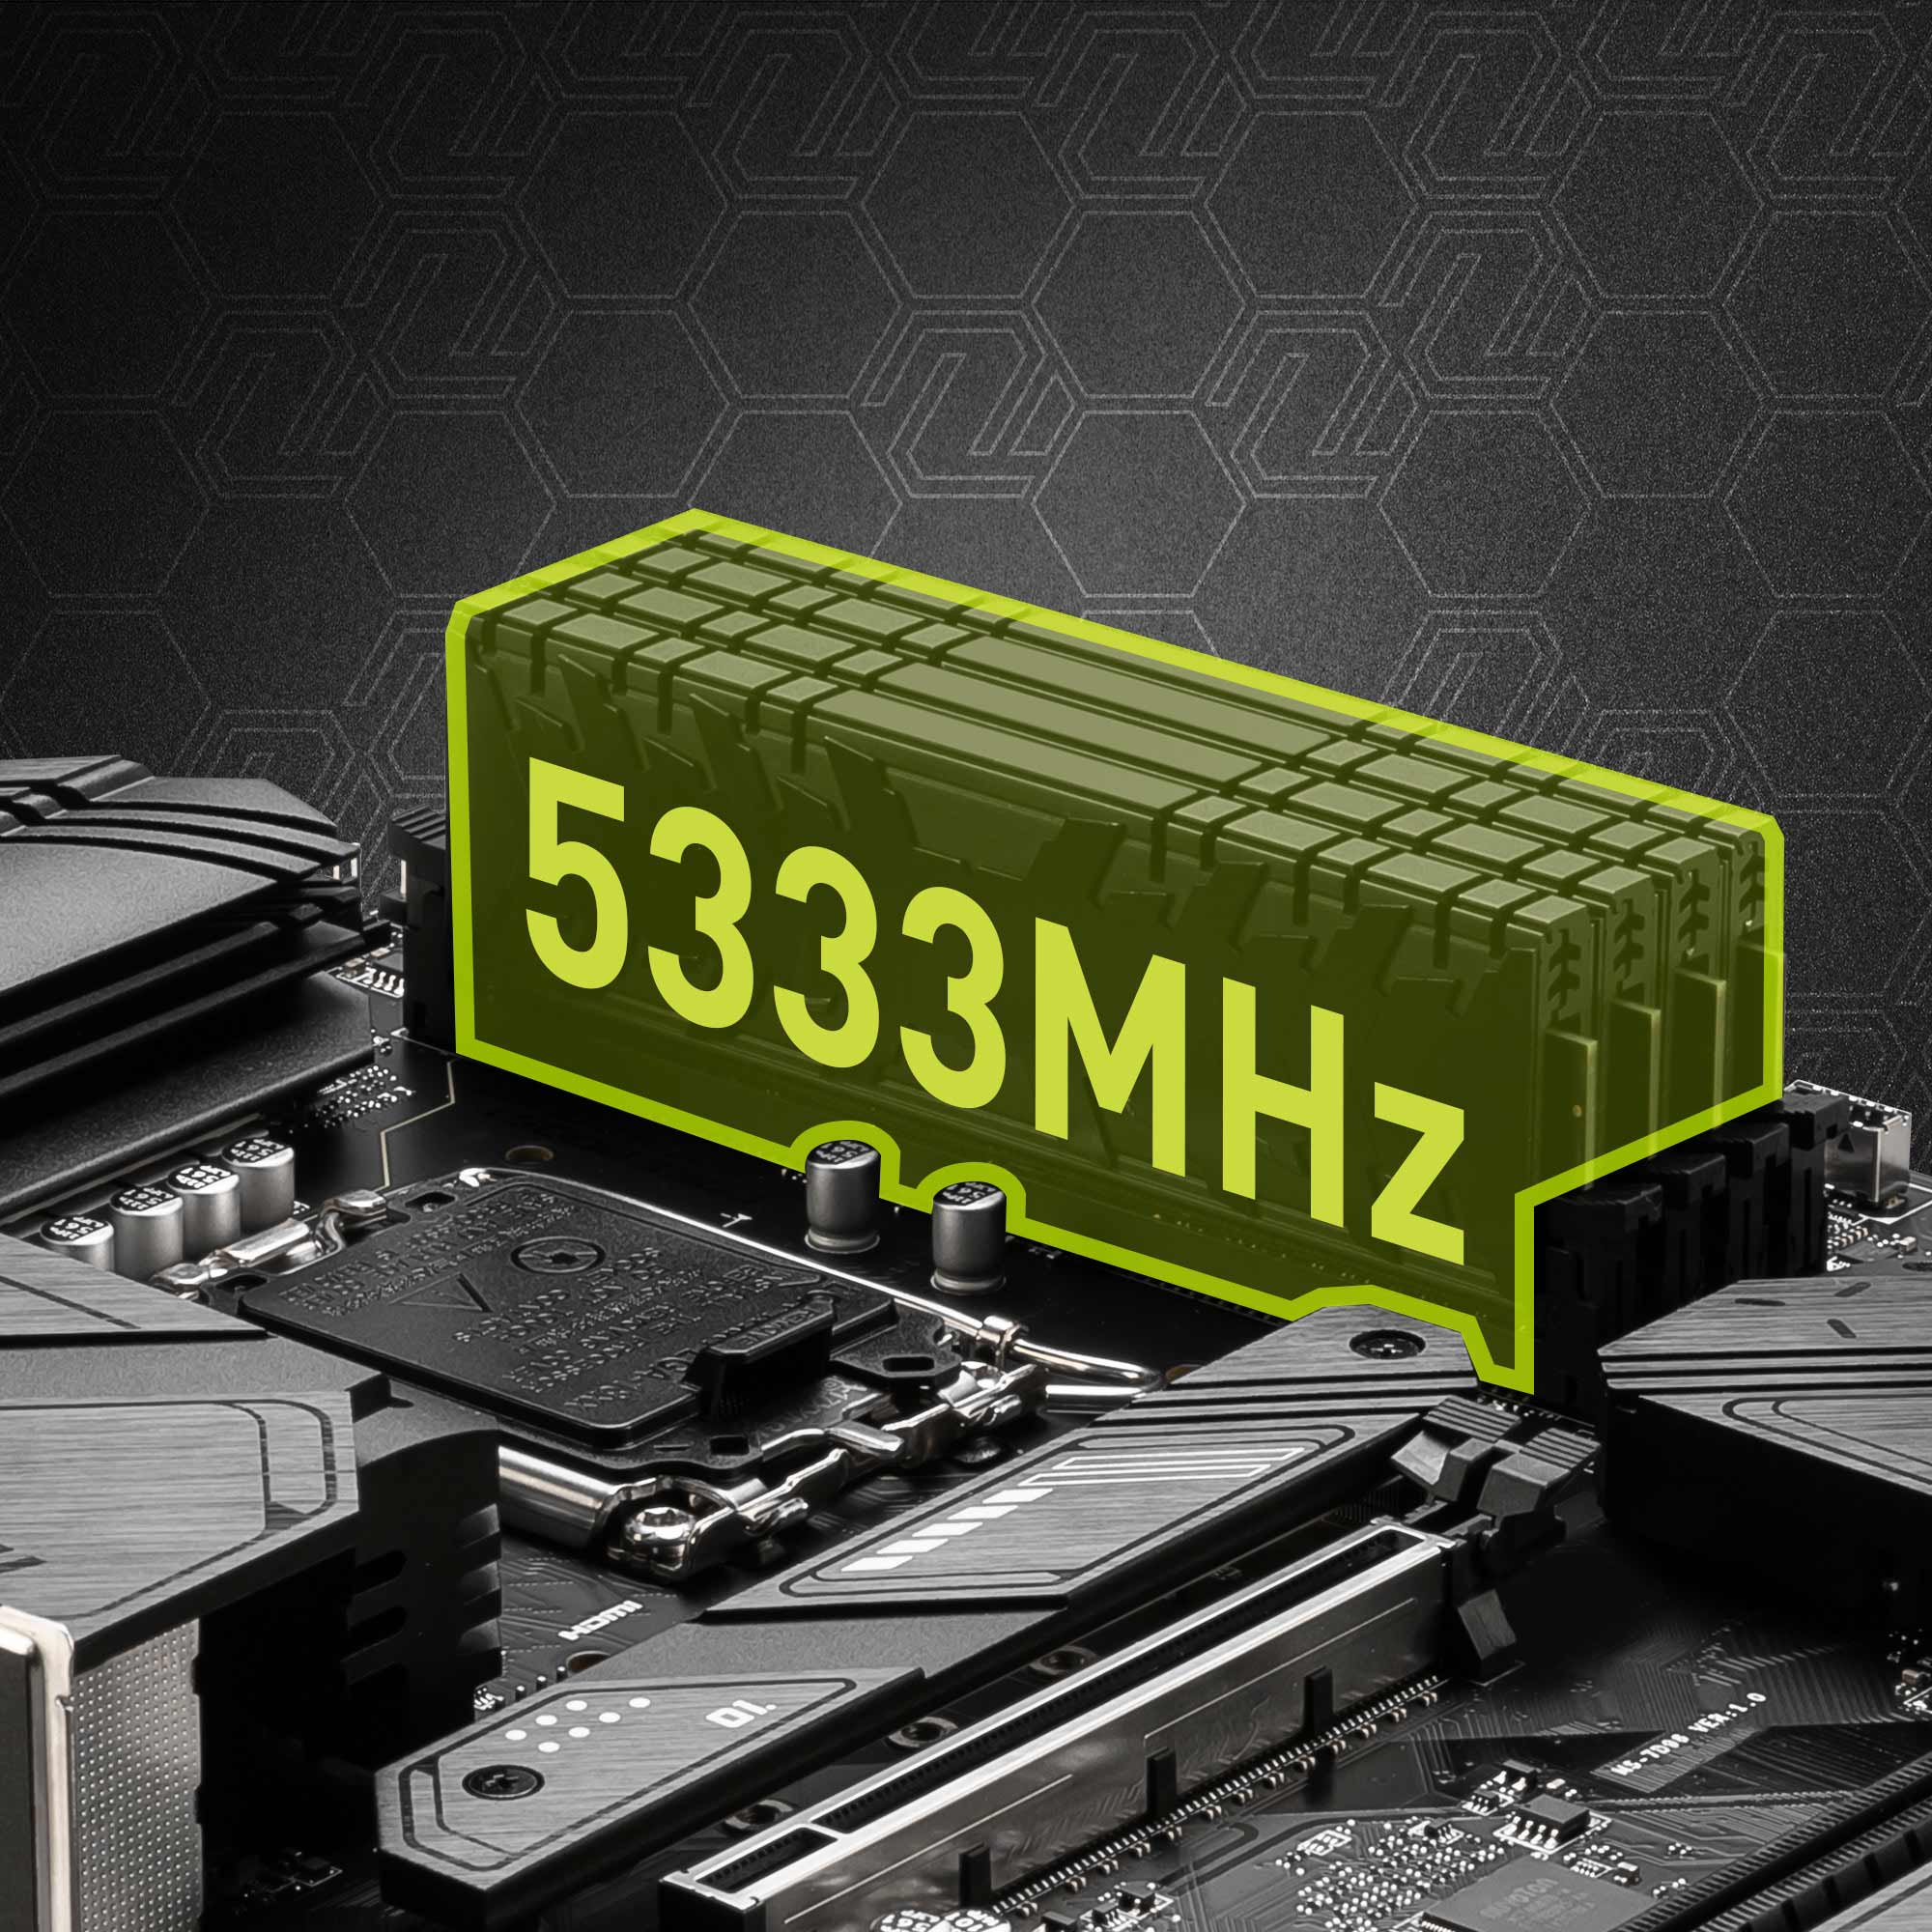 MAG B760 TOMAHAWK WIFI DDR4 Motherboard